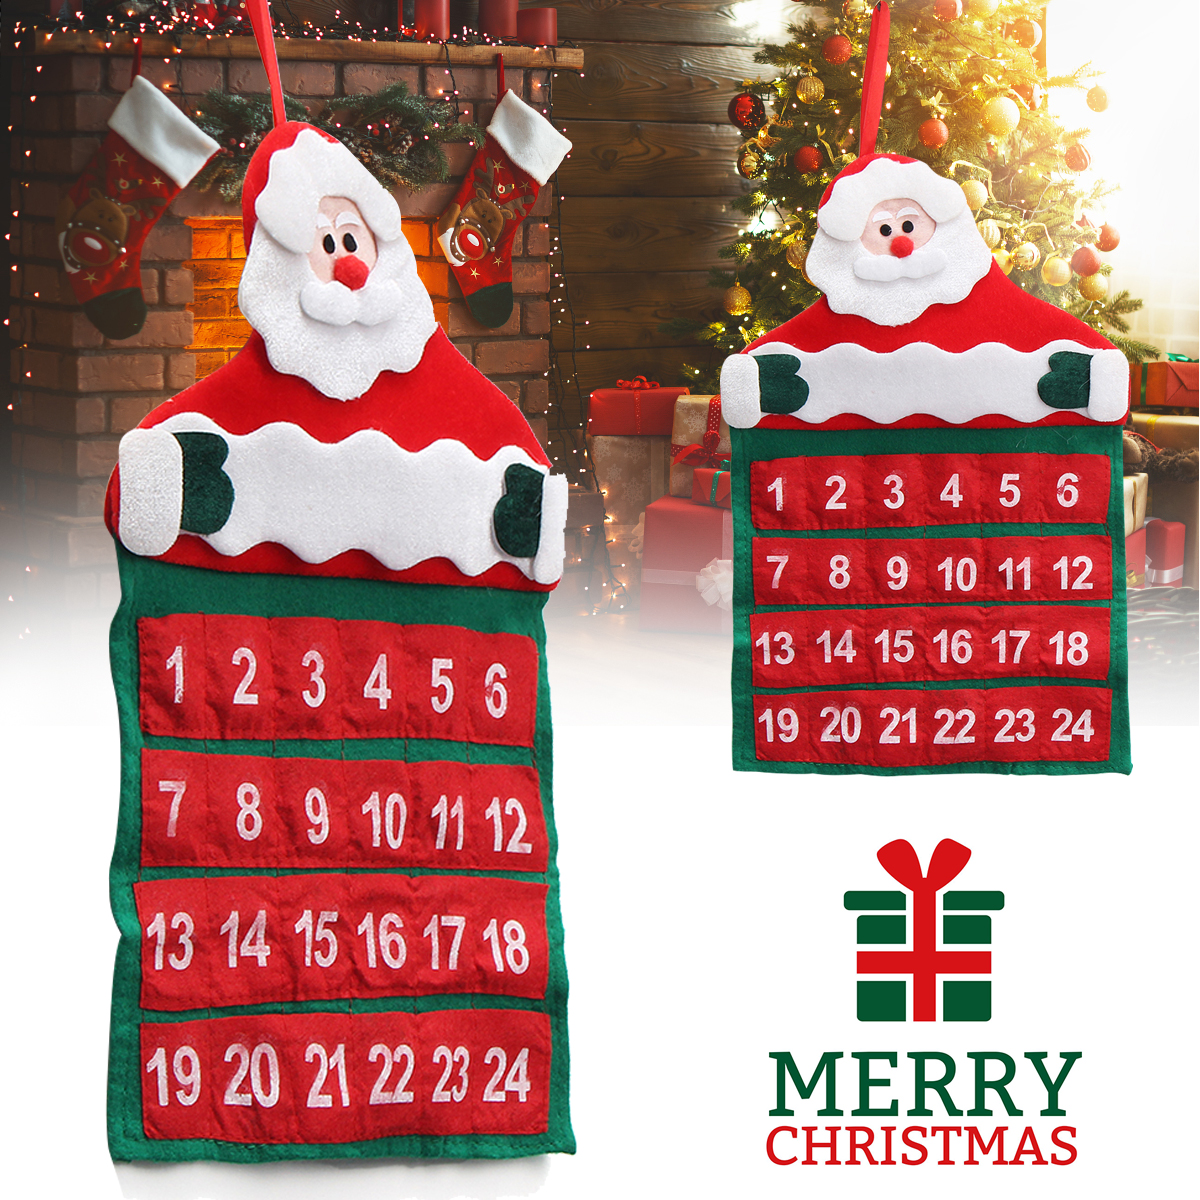 Felt-Christmas-Advent-Wall-Hanging-Calendar-Pockets-Santa-Reindeer-Snowman-Decorations-1462546-9